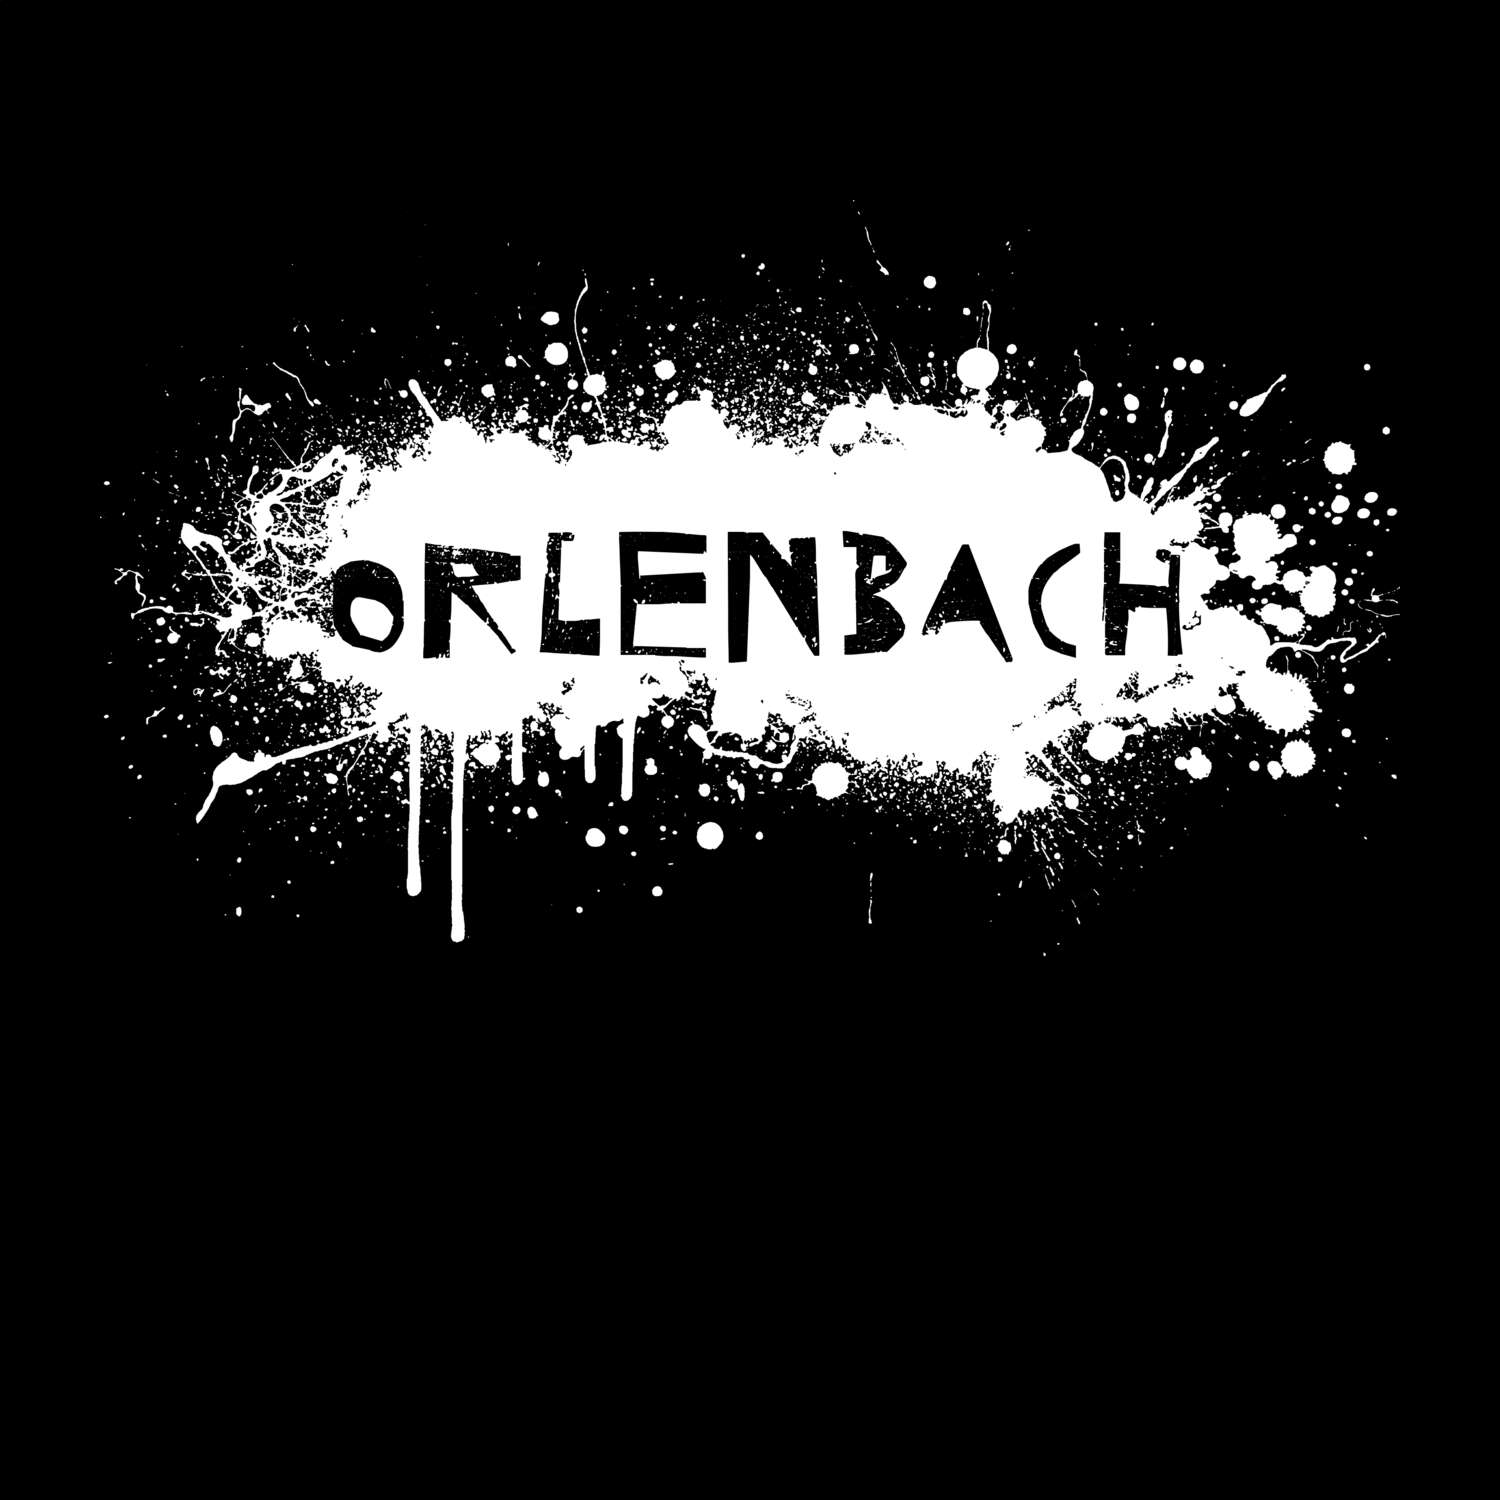 Orlenbach T-Shirt »Paint Splash Punk«